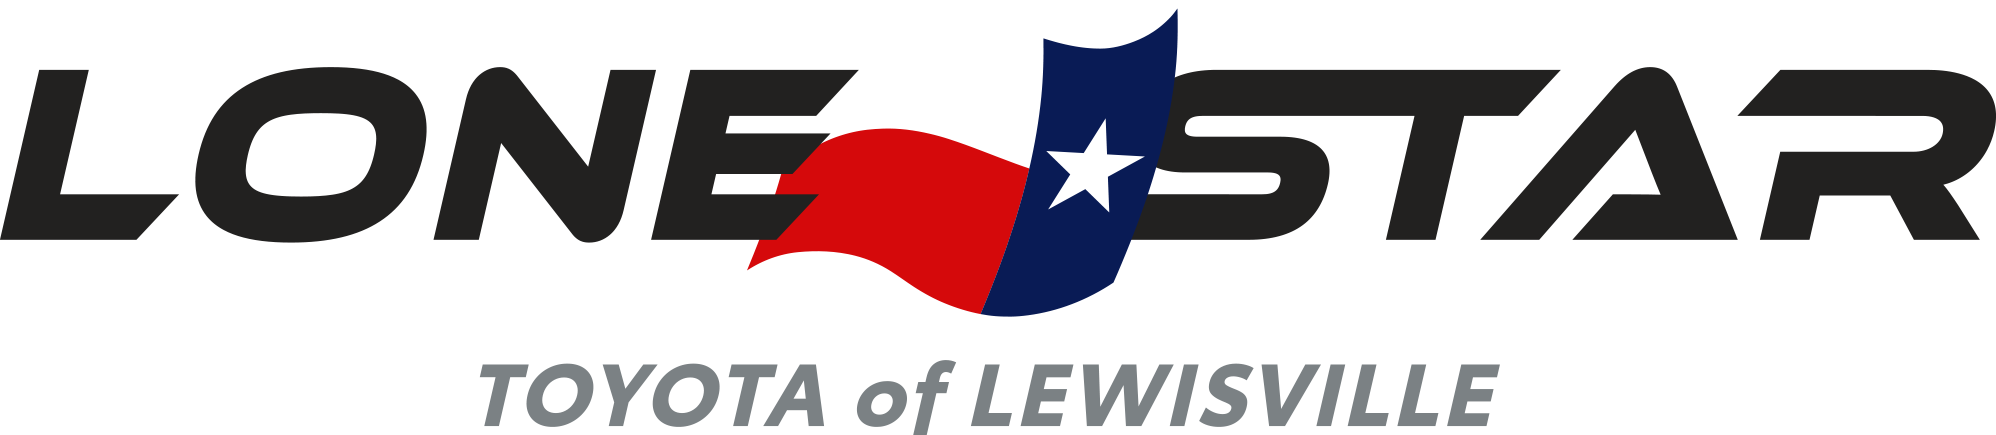 Lone Star Toyota of Lewisville Lewisville, TX